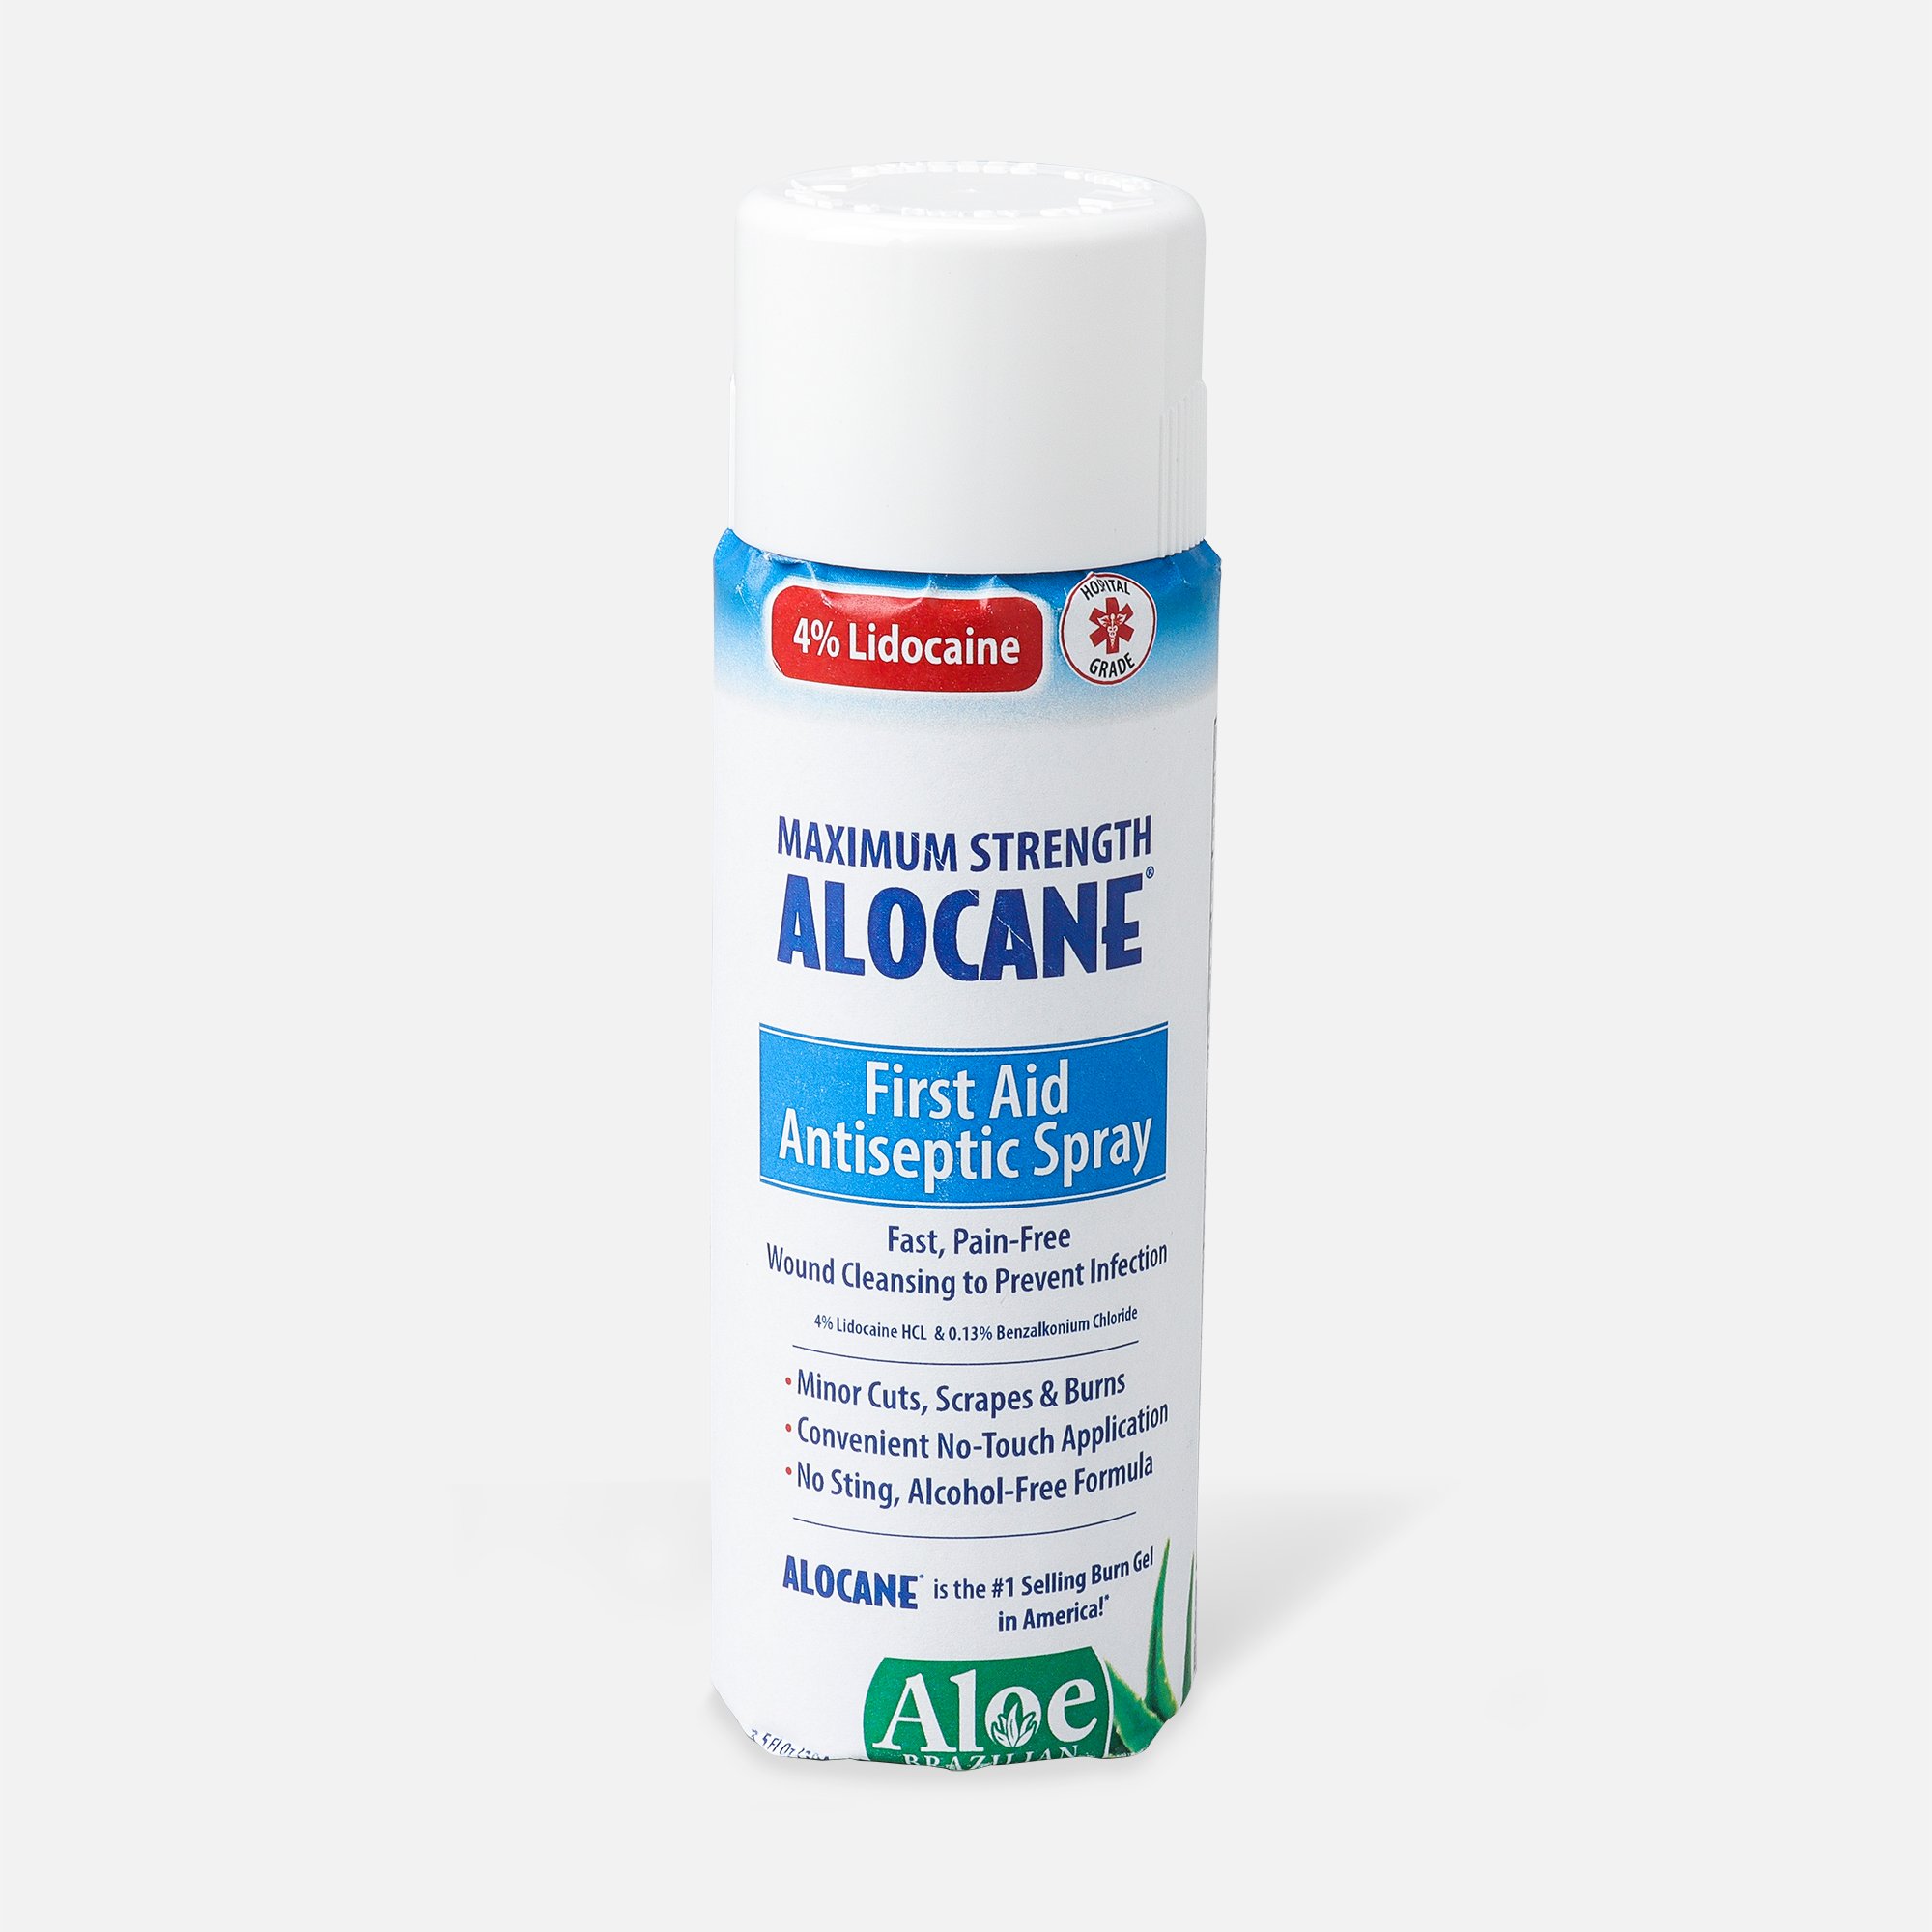 Alocane Antiseptic Spray, First Aid, Maximum Strength - 3.5 fl oz